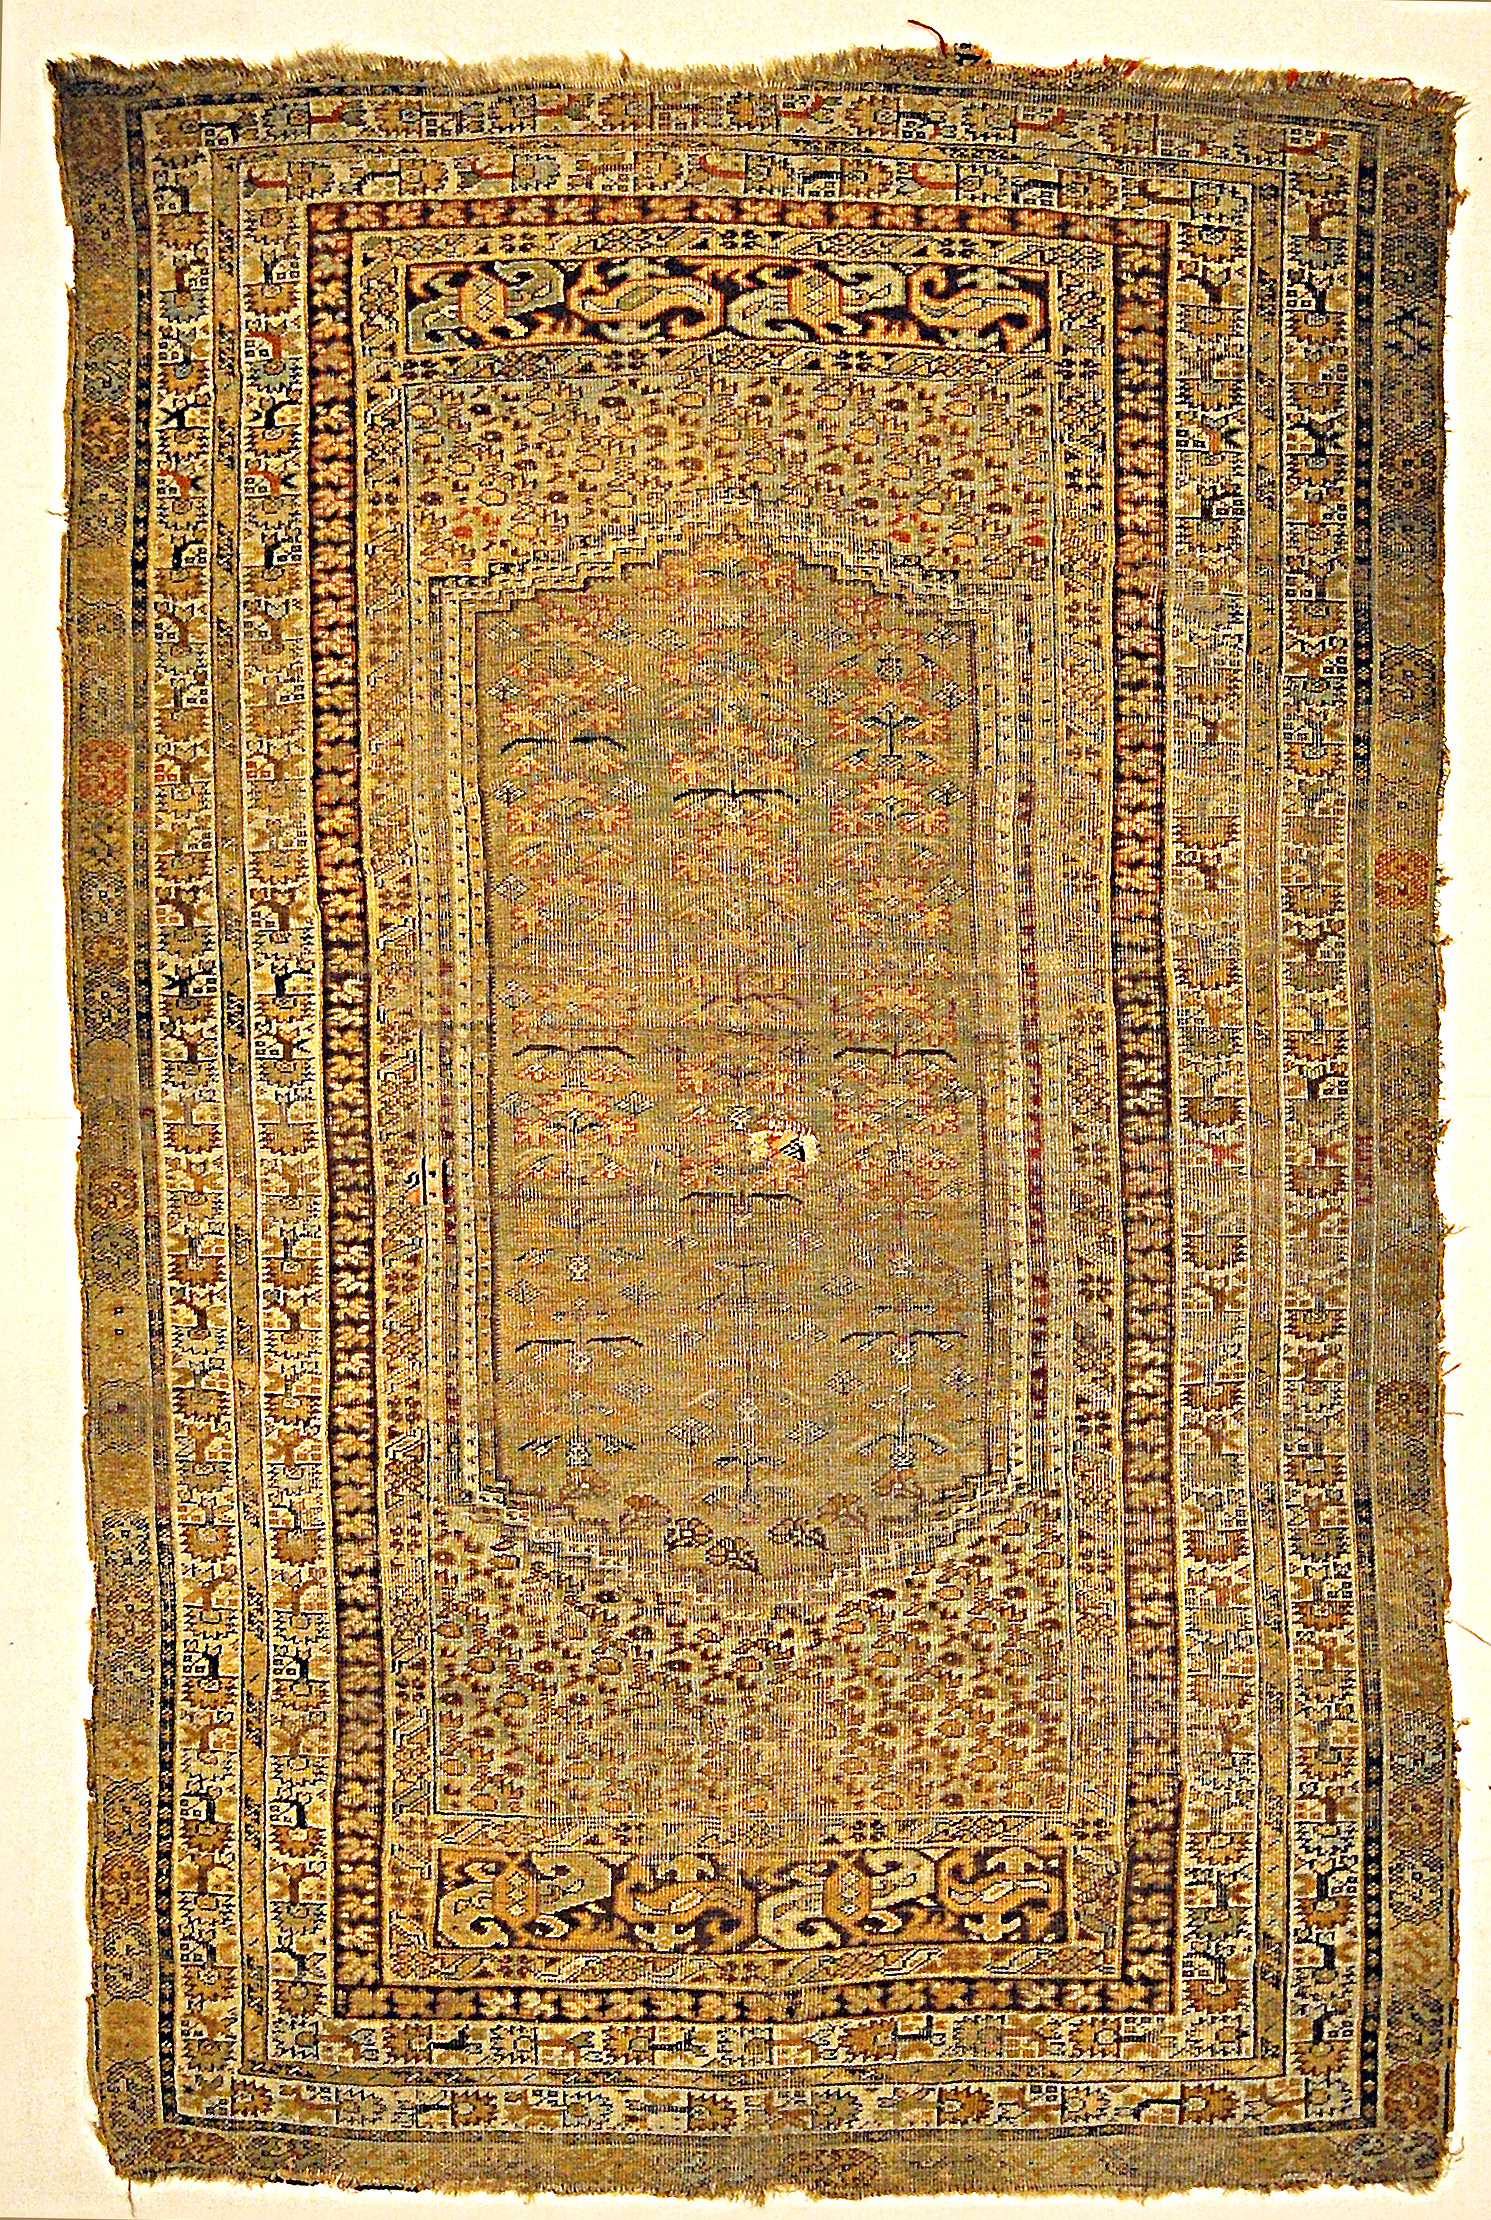 Circa 1700 Antique Kircehir Classic Turkish Rug Genuine Authentic Woven Carpet Art Santa Barbara Design Center Rugs and More